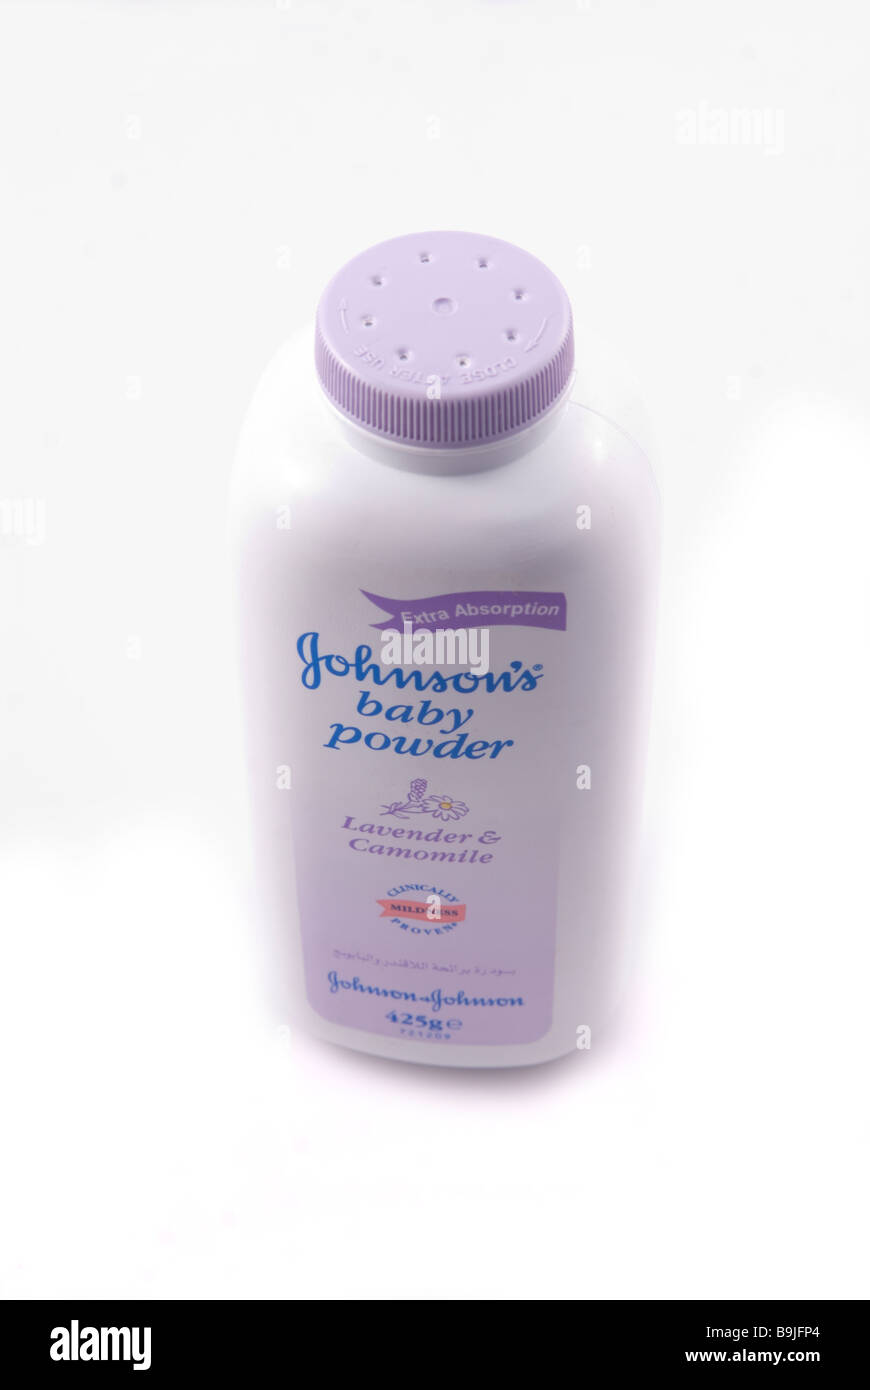 Johnson's baby powder tub cutout against a white background Stock Photo